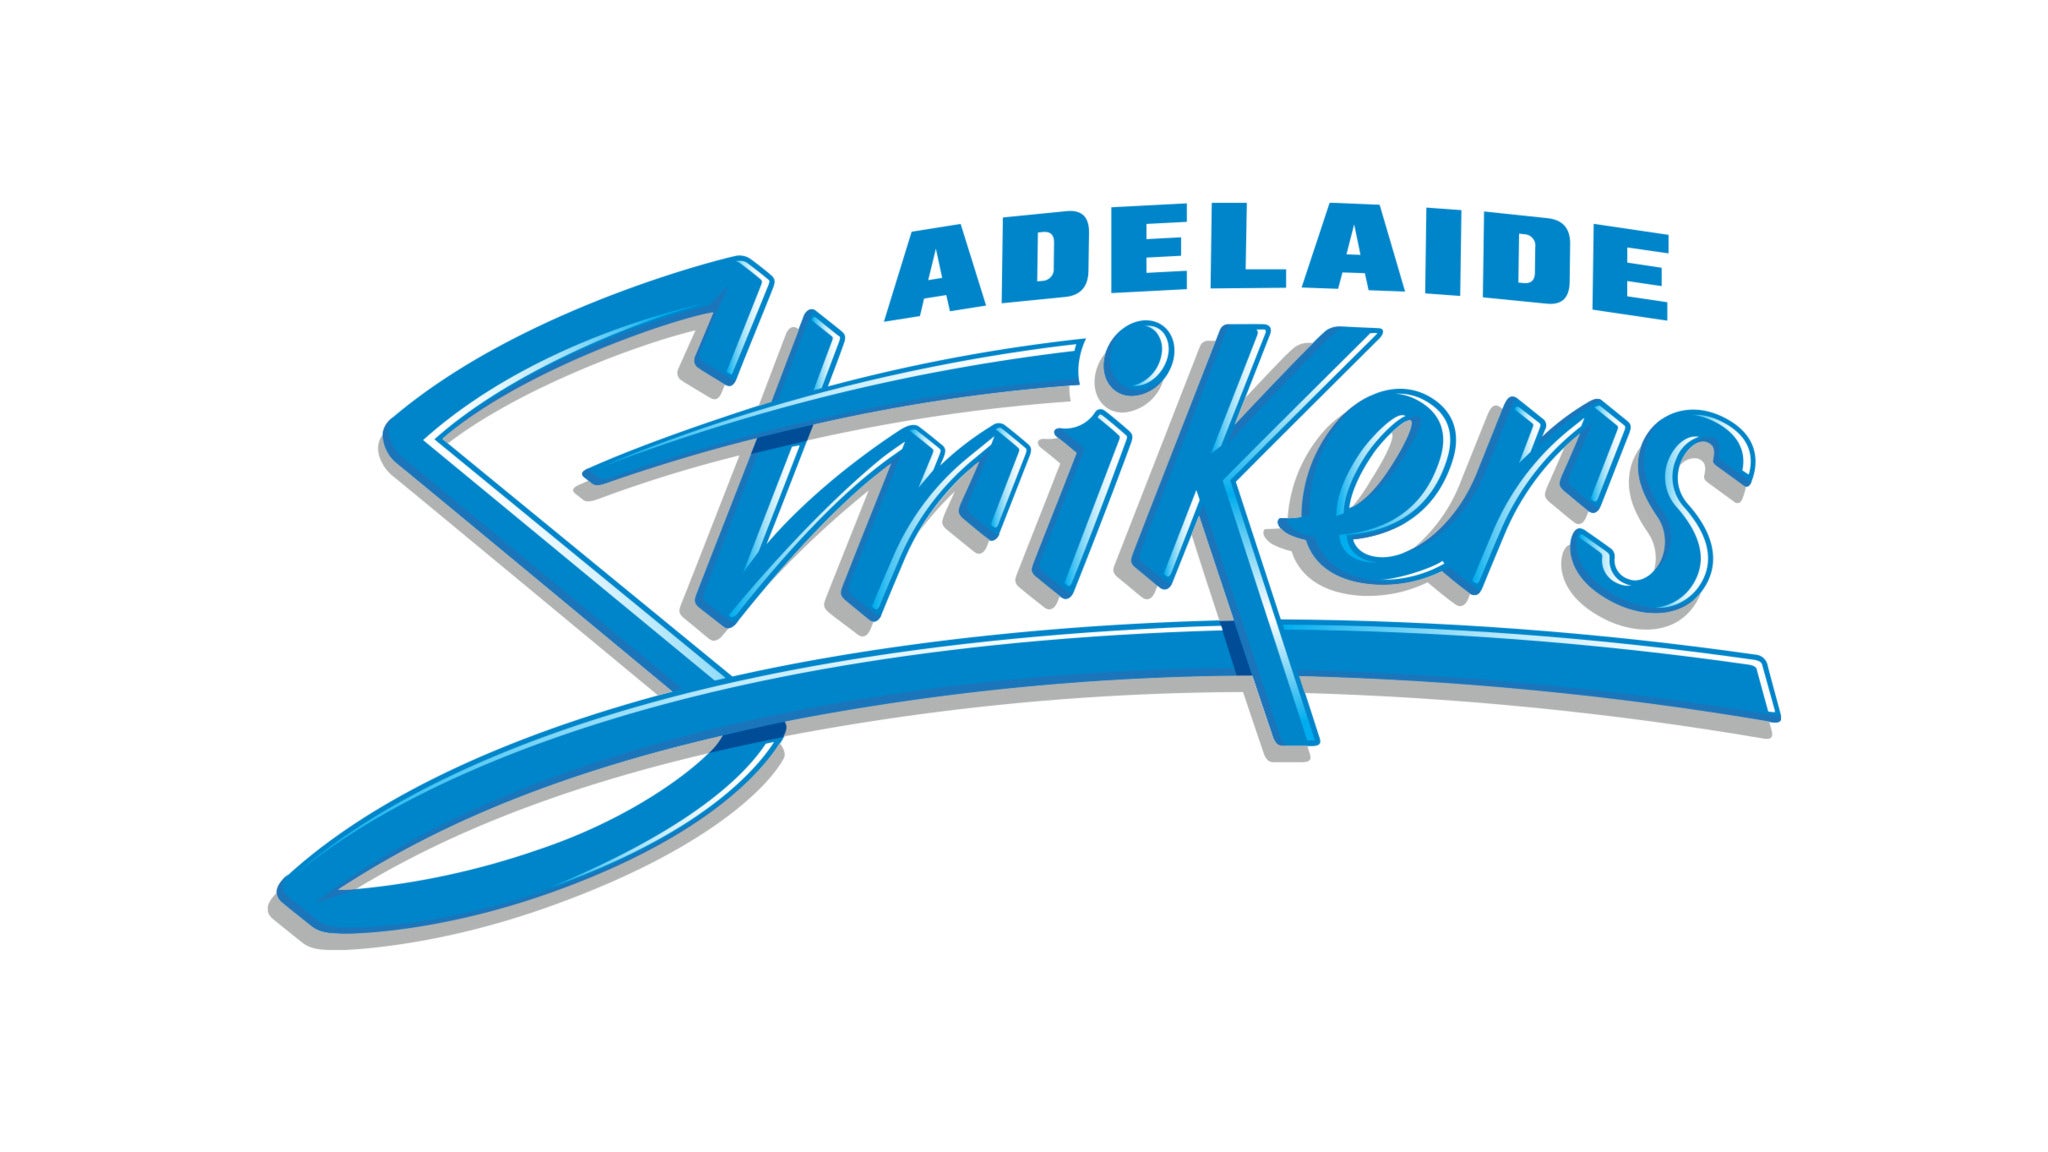 Adelaide Strikers presale information on freepresalepasswords.com